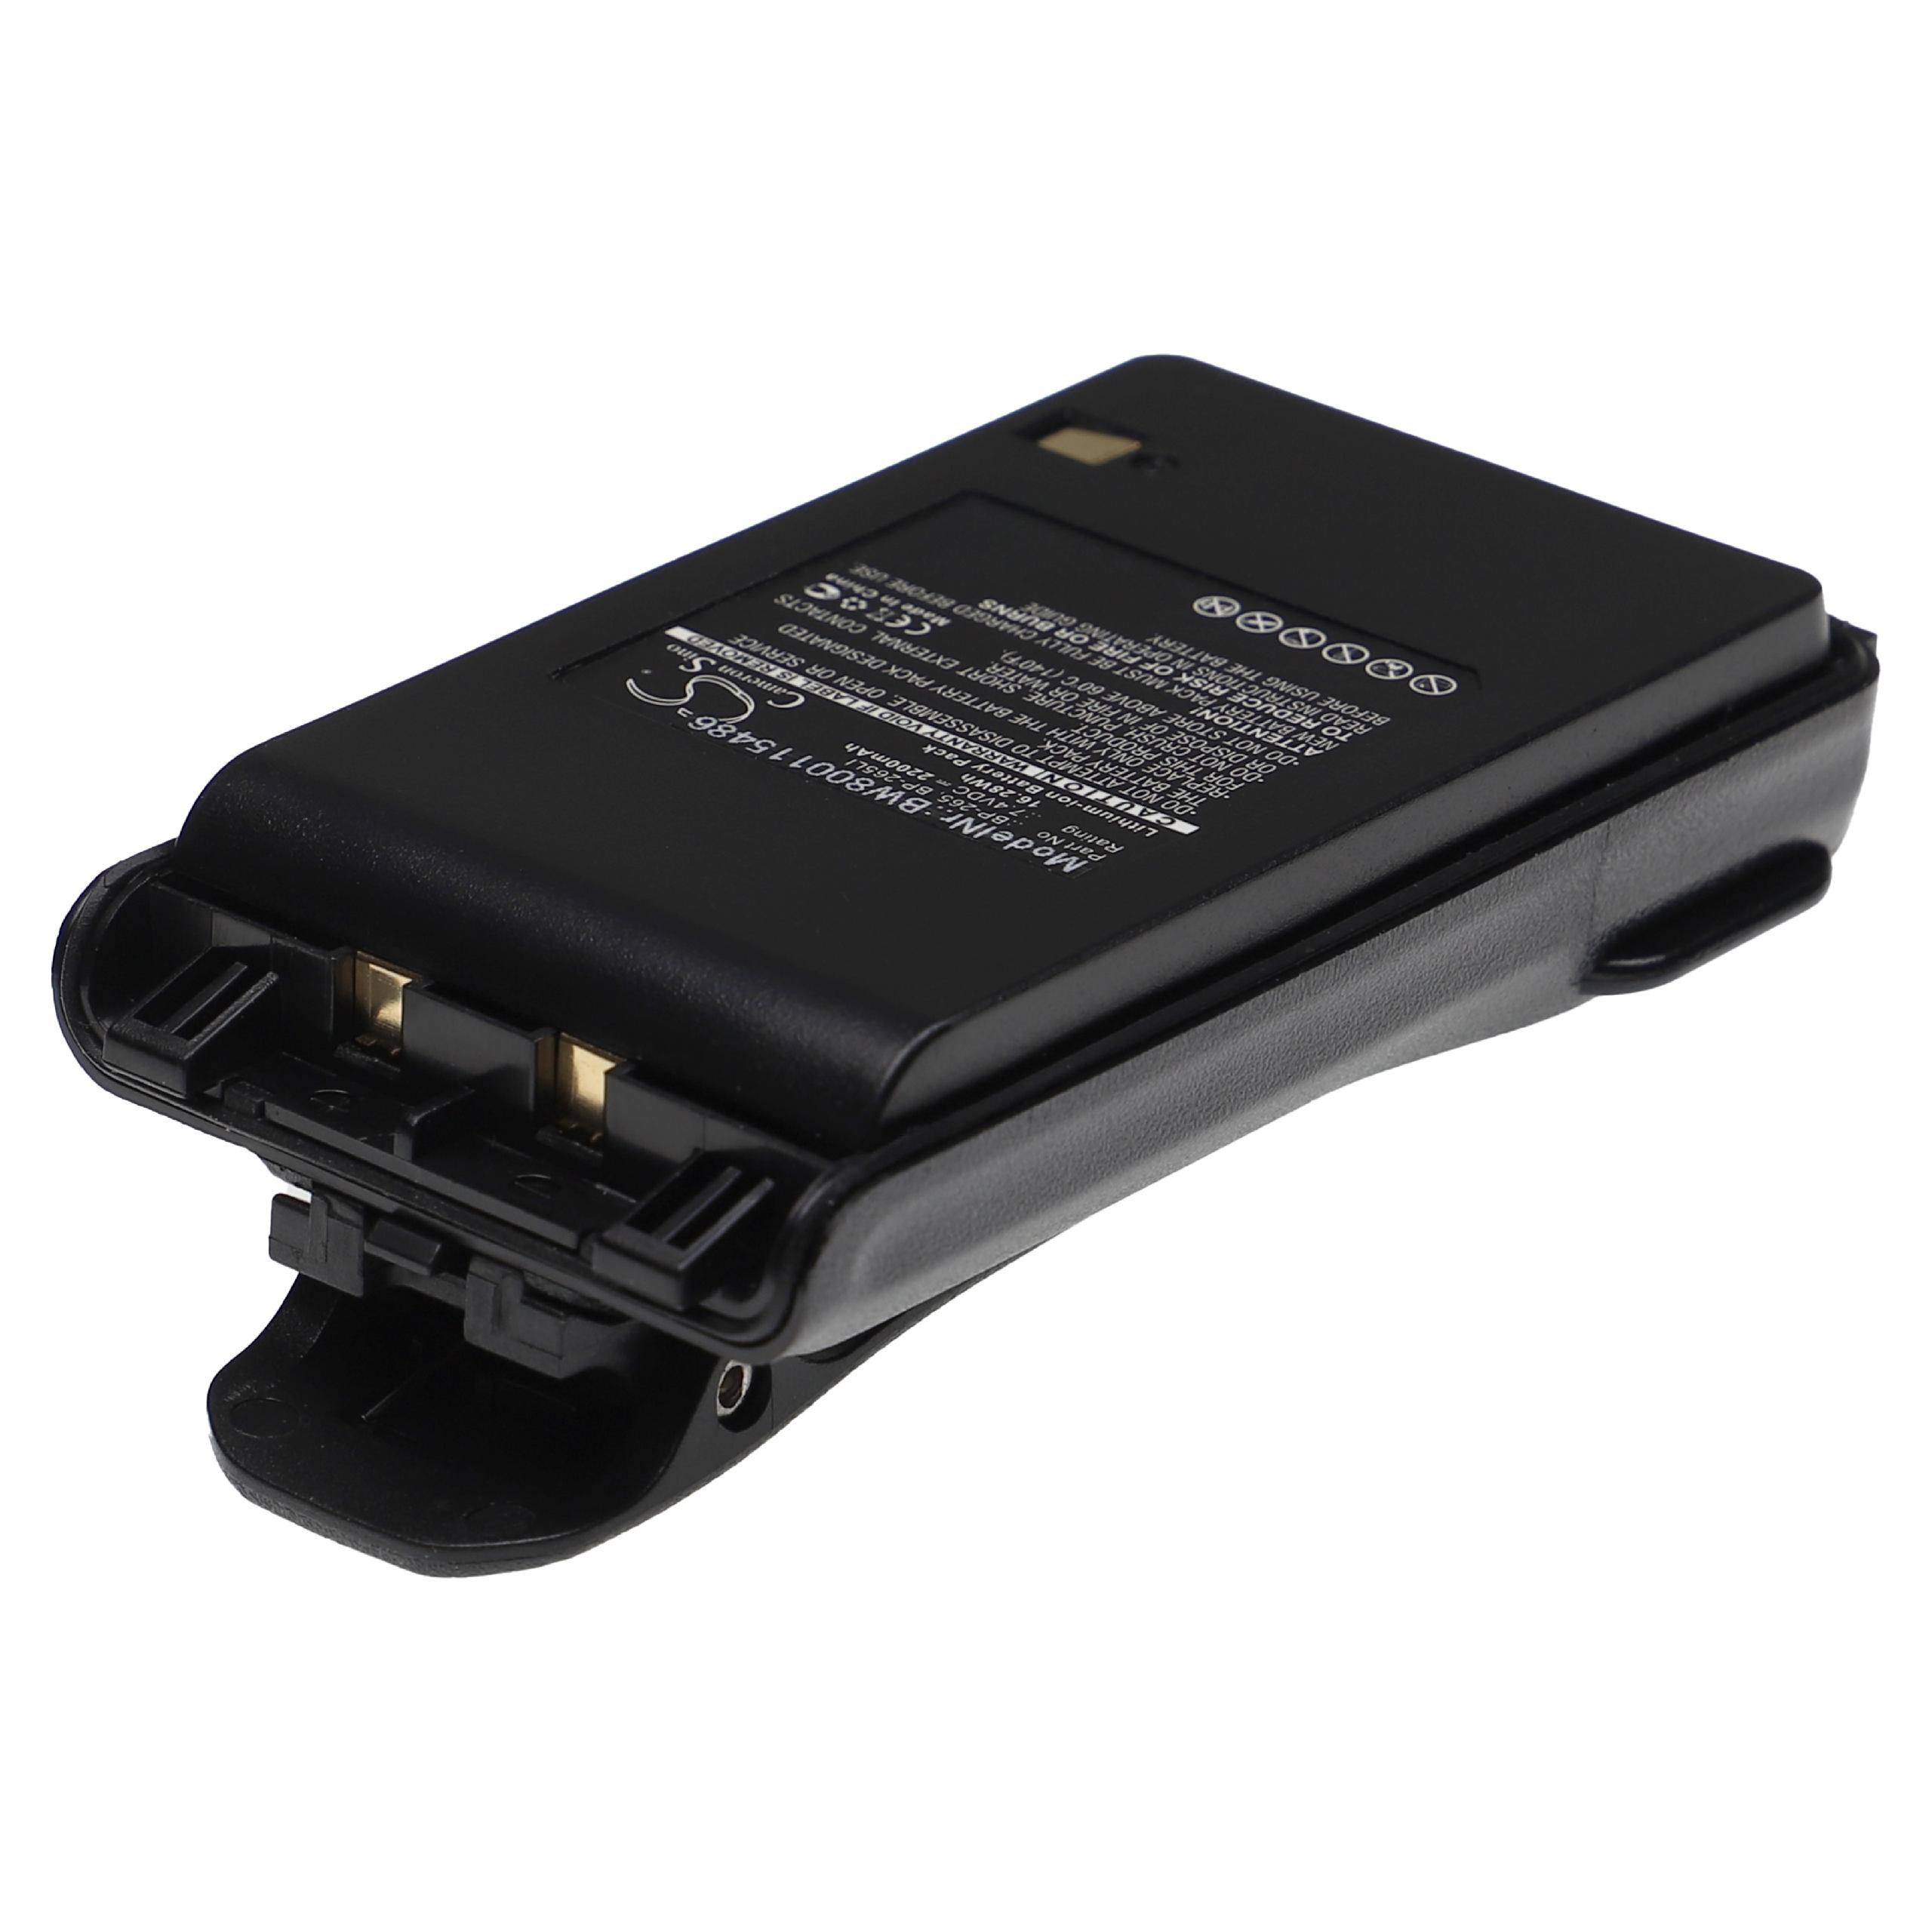 Radio Battery Replacement for Icom BP-265LI, BP-265 - 2200mAh 7.4V Li-Ion + Belt Clip